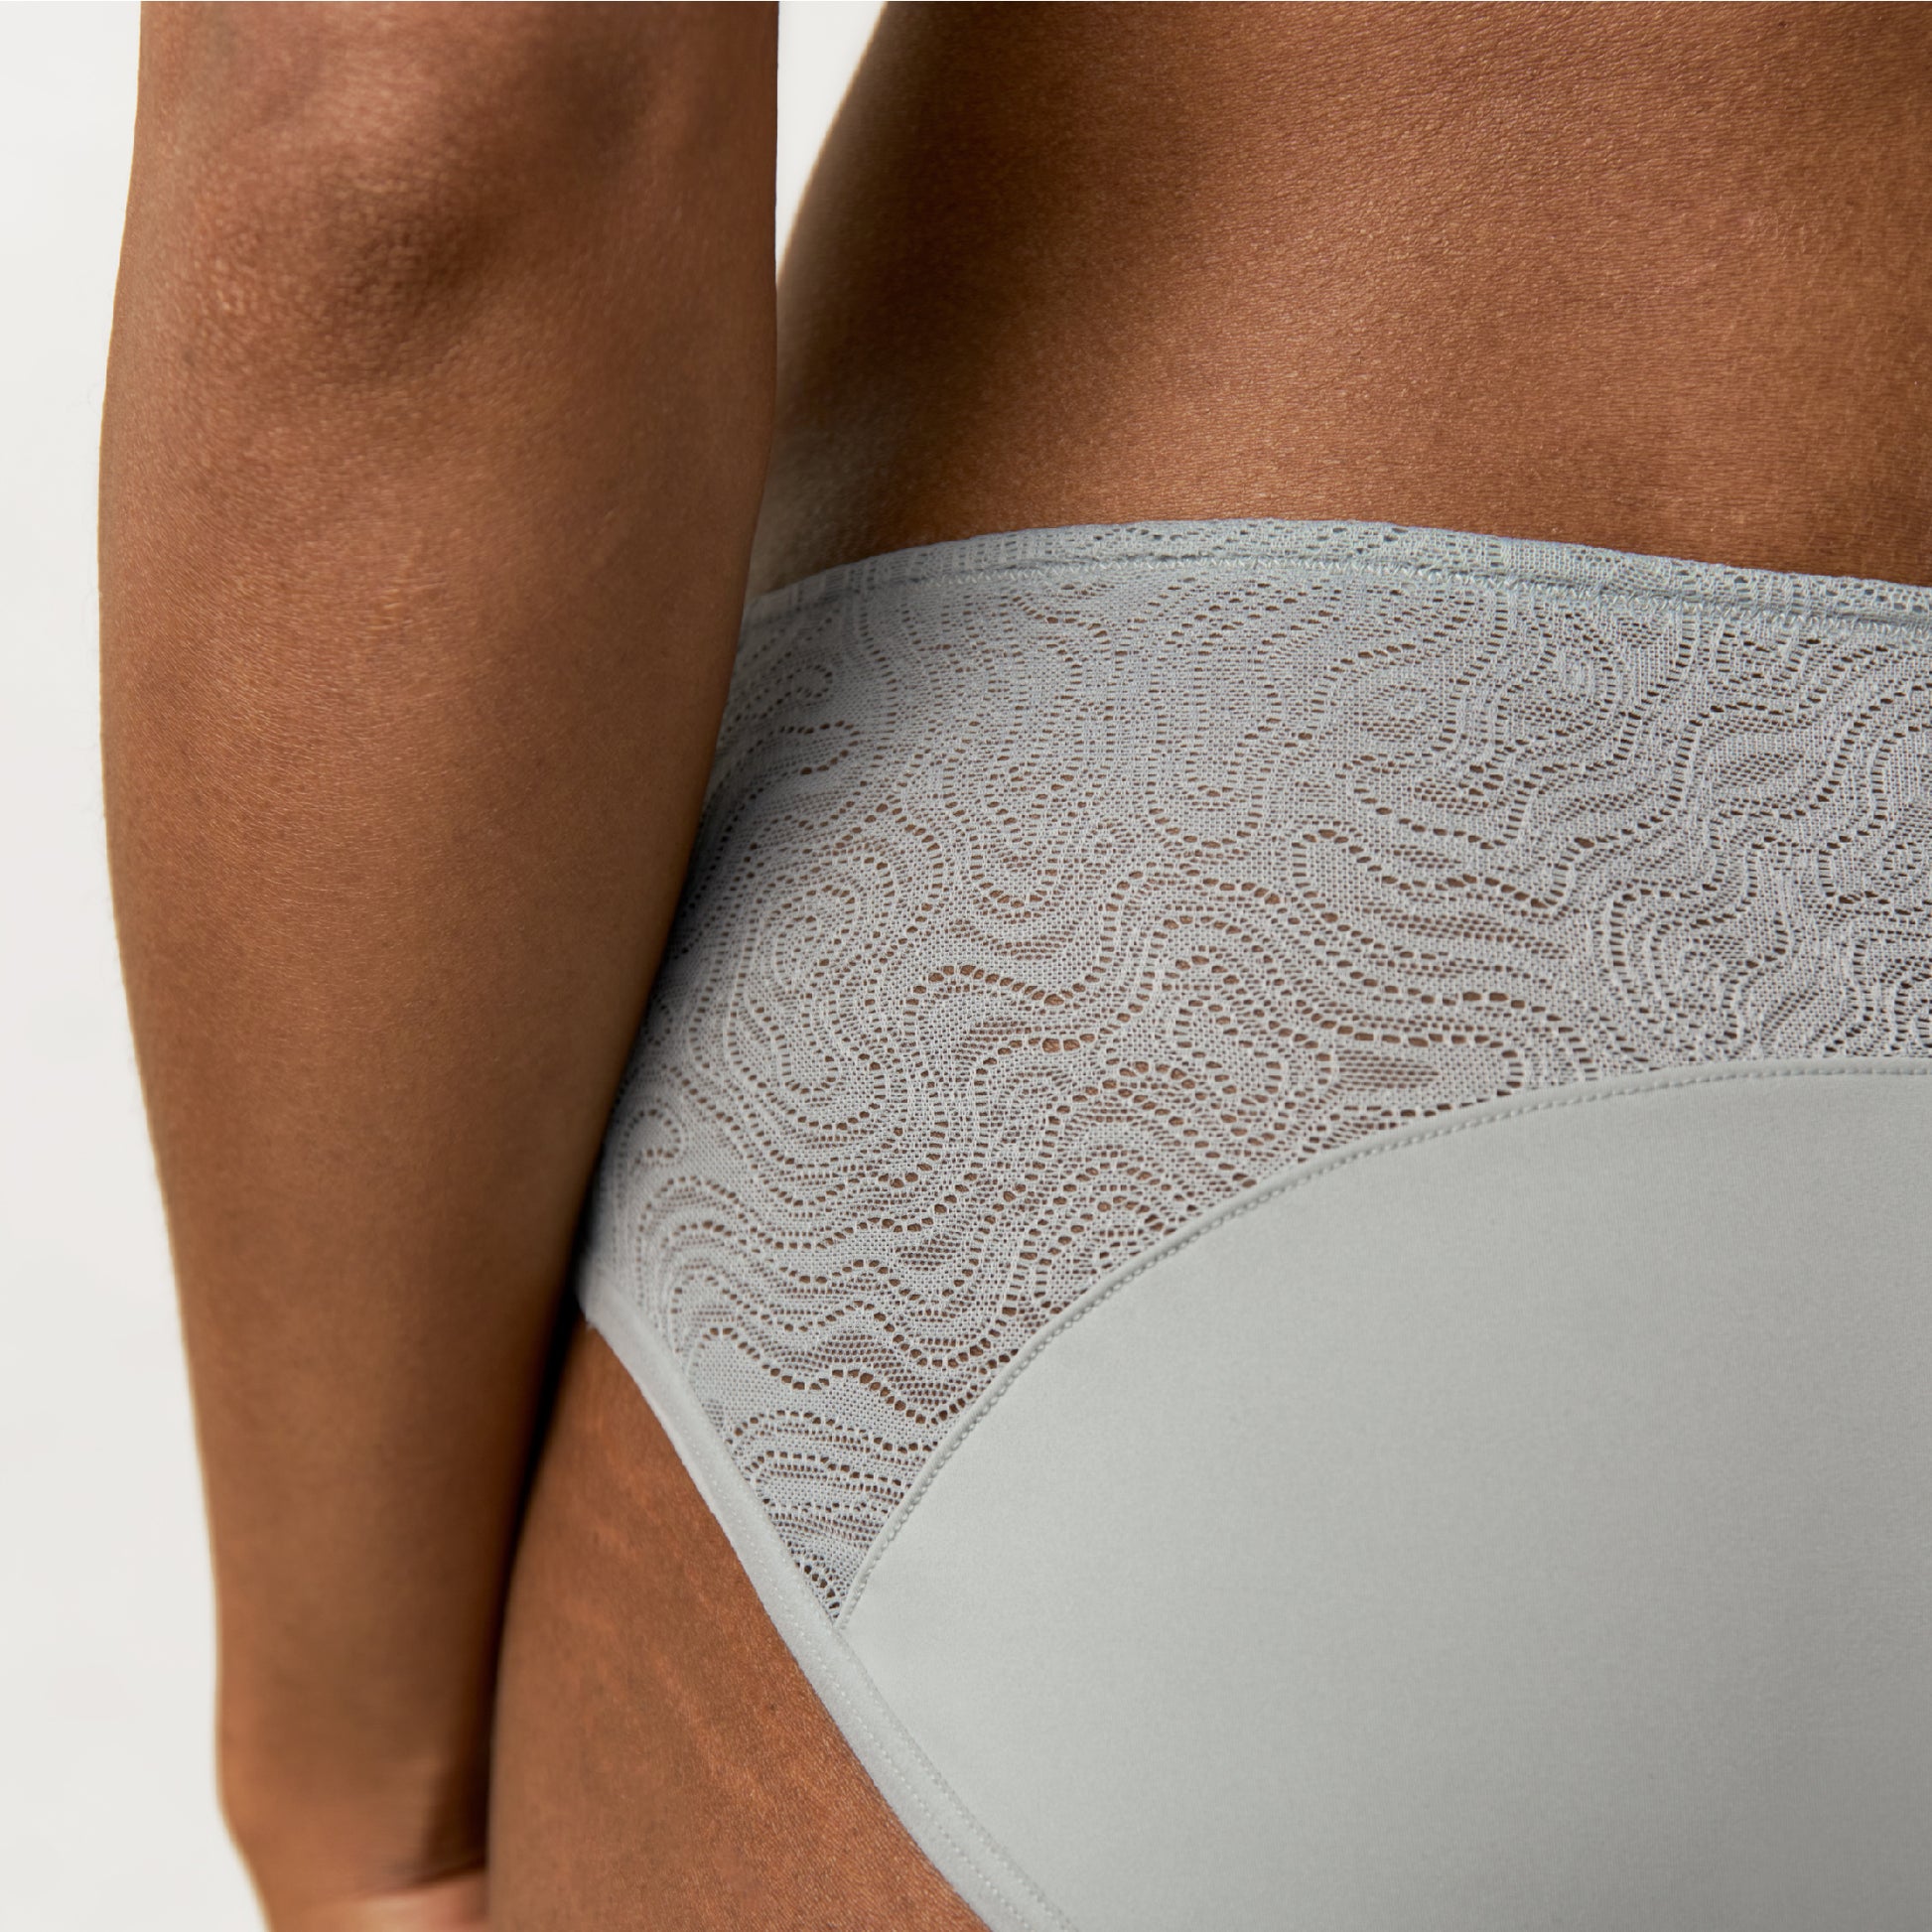 Saalt Leak Proof Period Underwear Regular Absorbency - Soft-Stretch  European Lace High Waist Briefs - Quartz Blush - XS